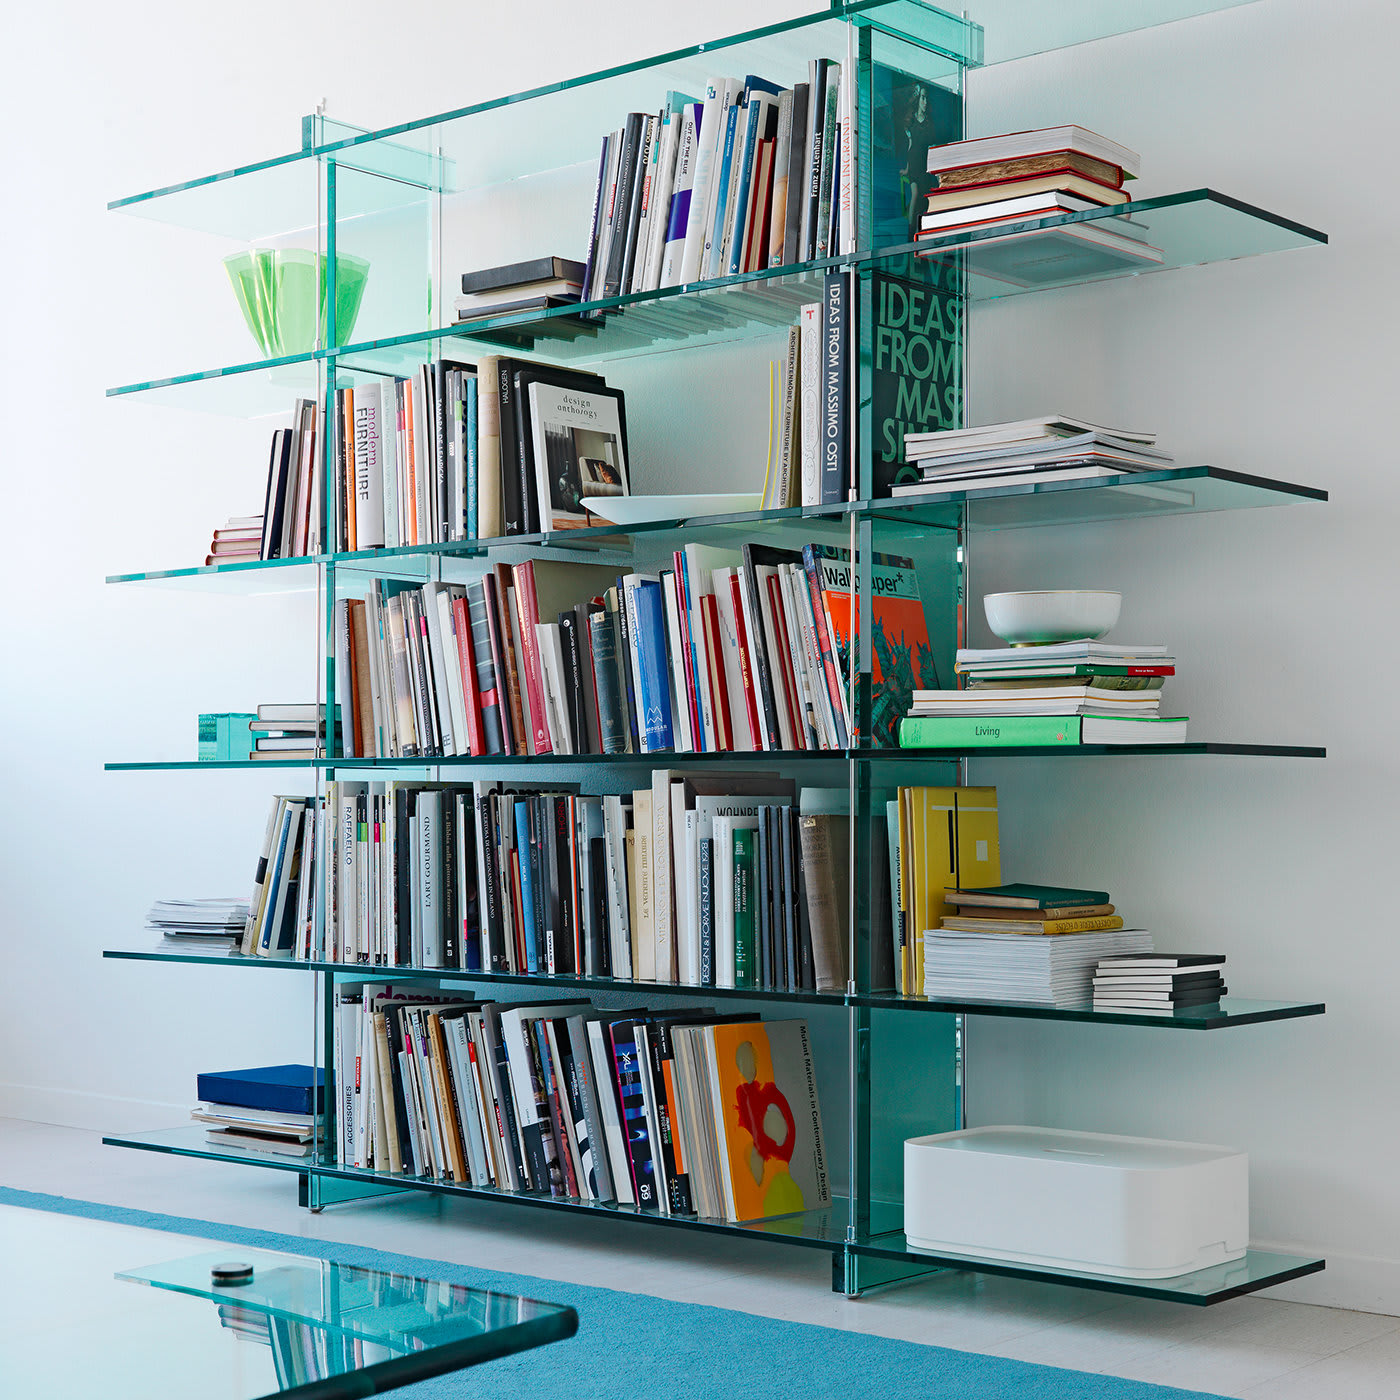 Teso Bookcase by Renzo Piano - FontanaArte